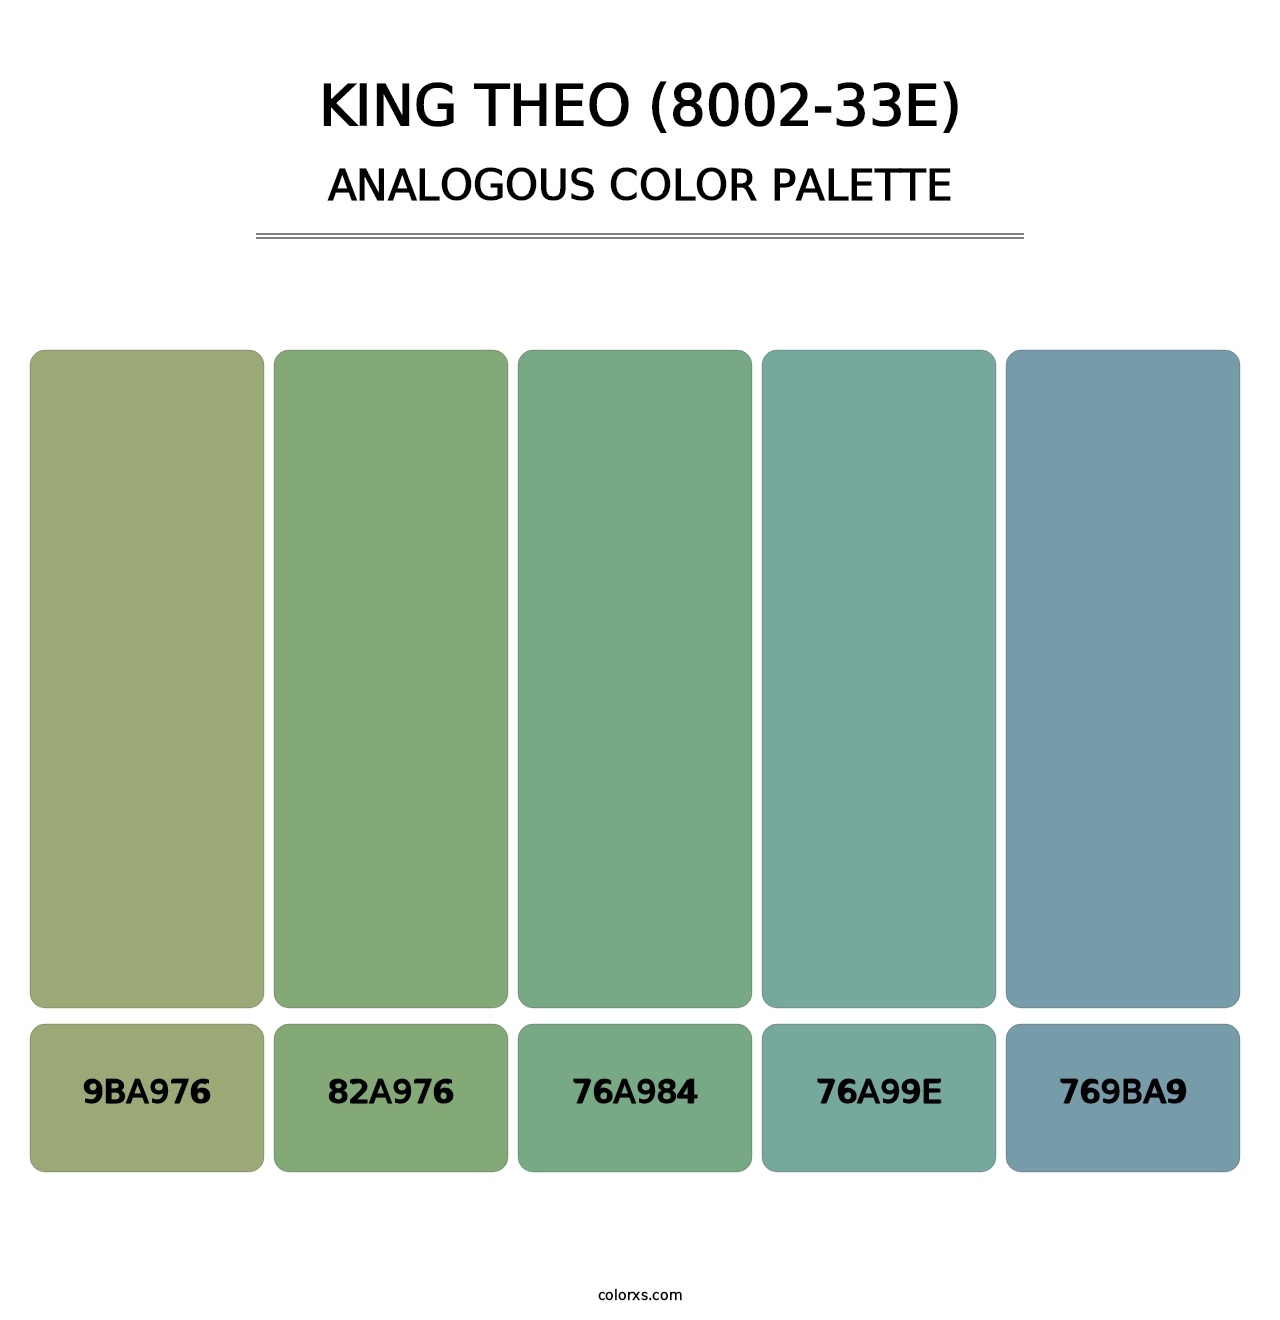 King Theo (8002-33E) - Analogous Color Palette